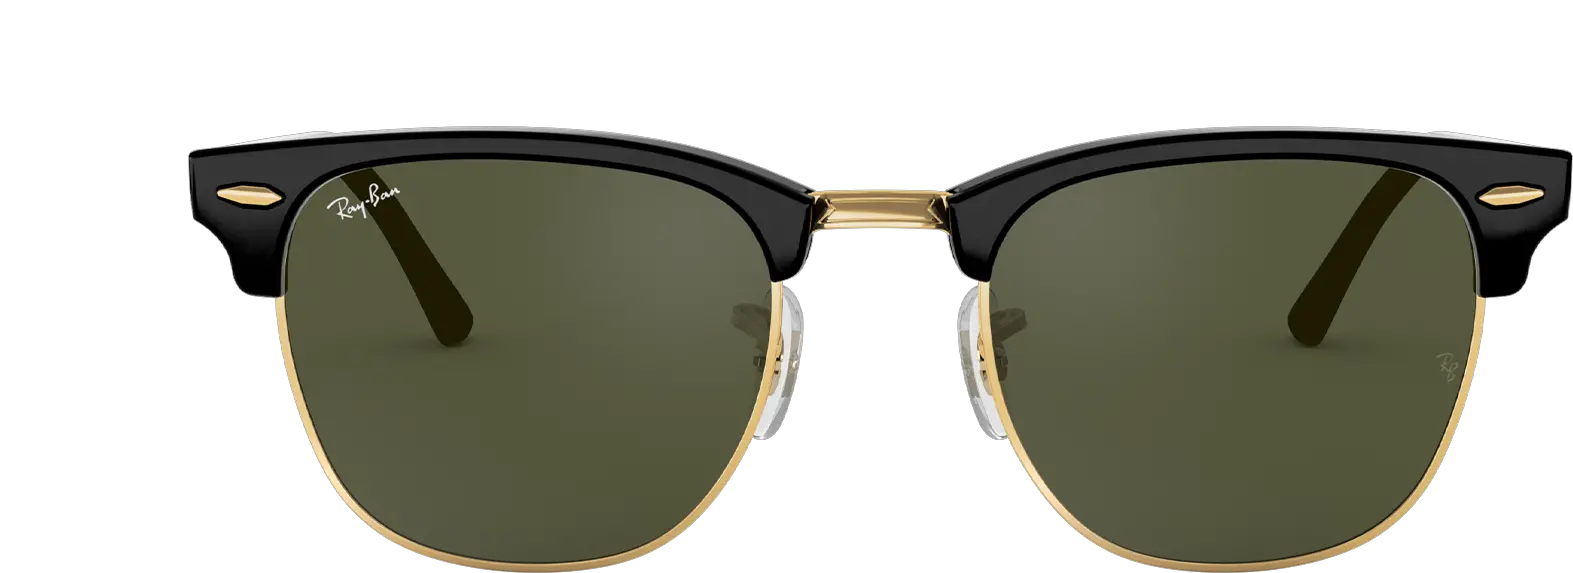 Sunglasses And Eyeglasses Ray Ban Sunglasses Price Png Ray Bans Png